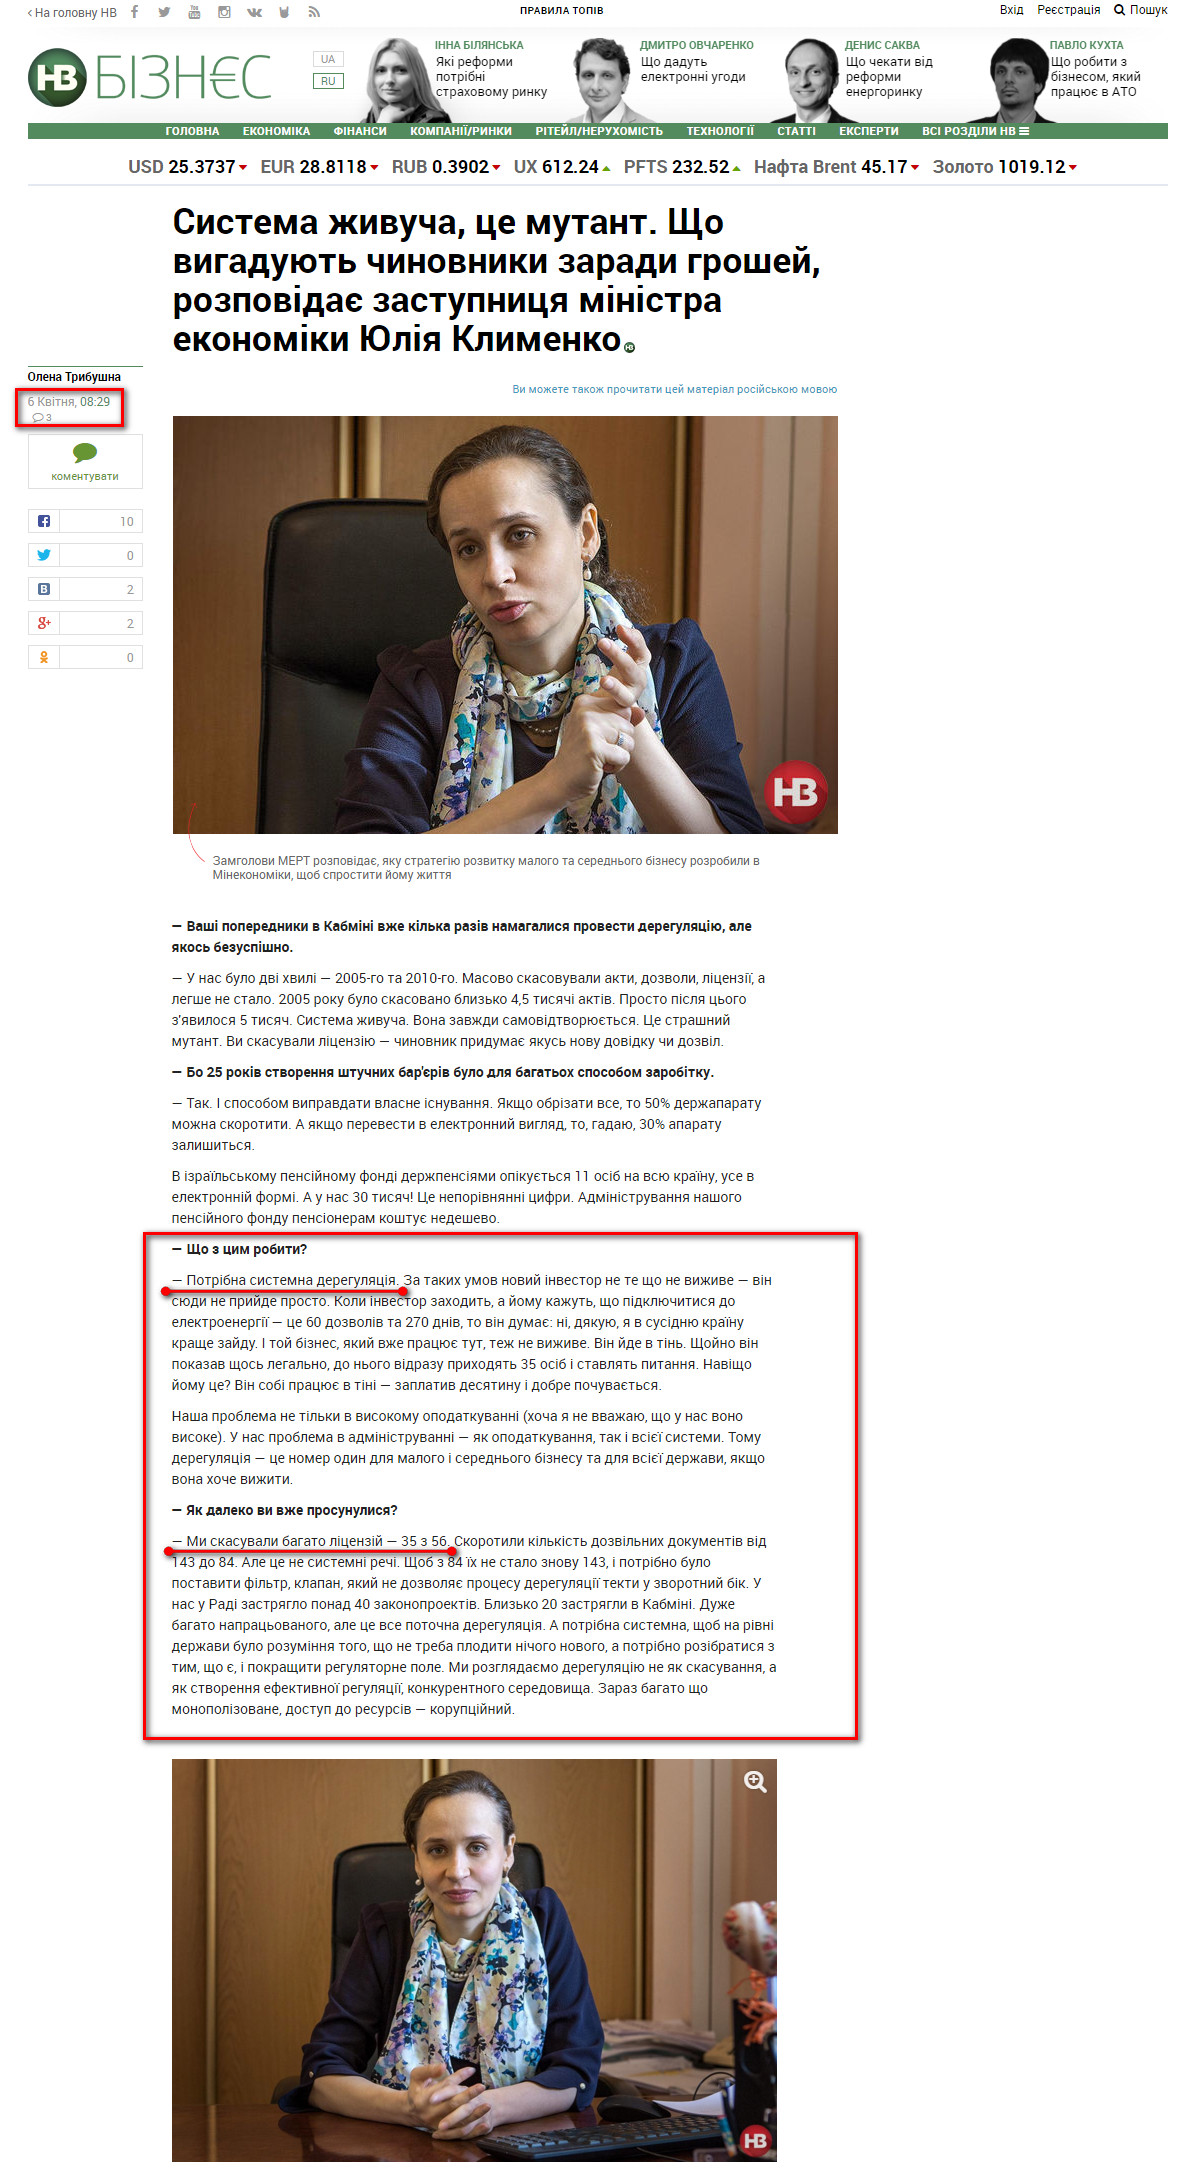 http://biz.nv.ua/ukr/publications/sistema-sampovosproizvoditsja-shcho-vigadujut-chinovniki-zaradi-zarobitku-rozpovidaje-zastupnik-ministra-ekonomiki-julija-klimenko-107952.html